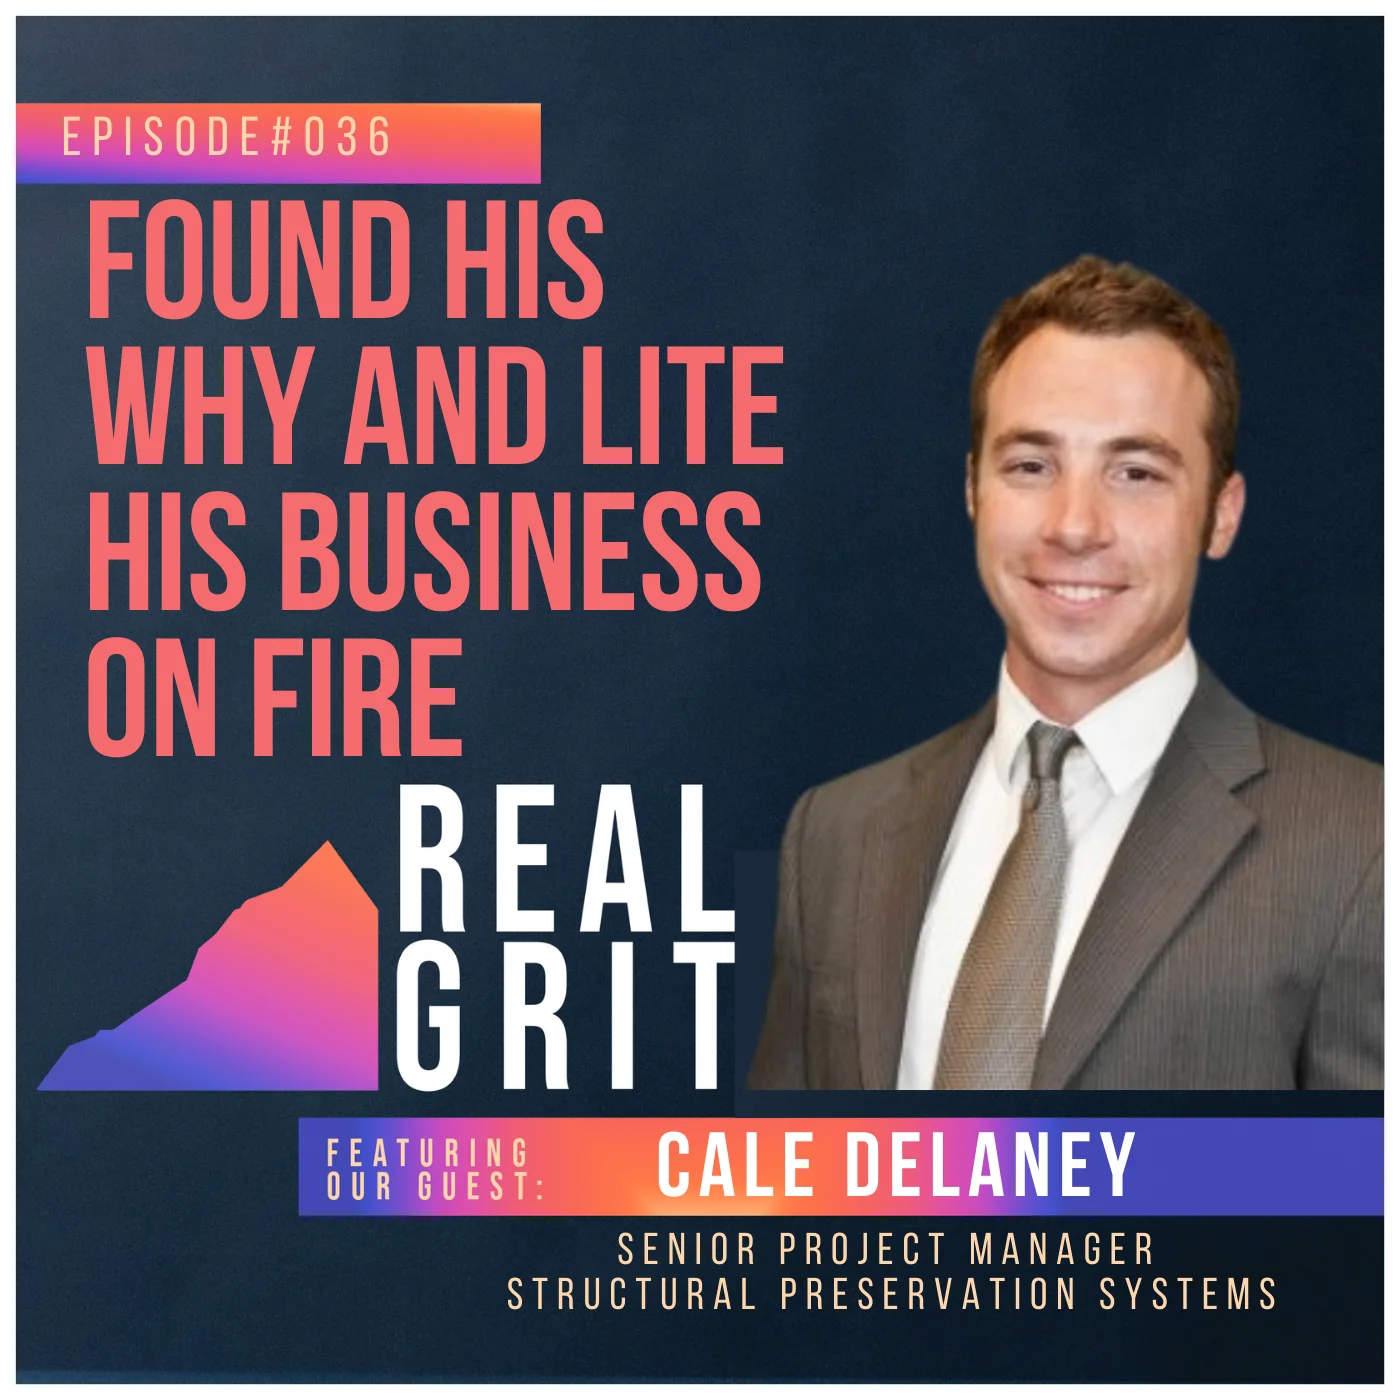 Cale Delaney podcast promo image